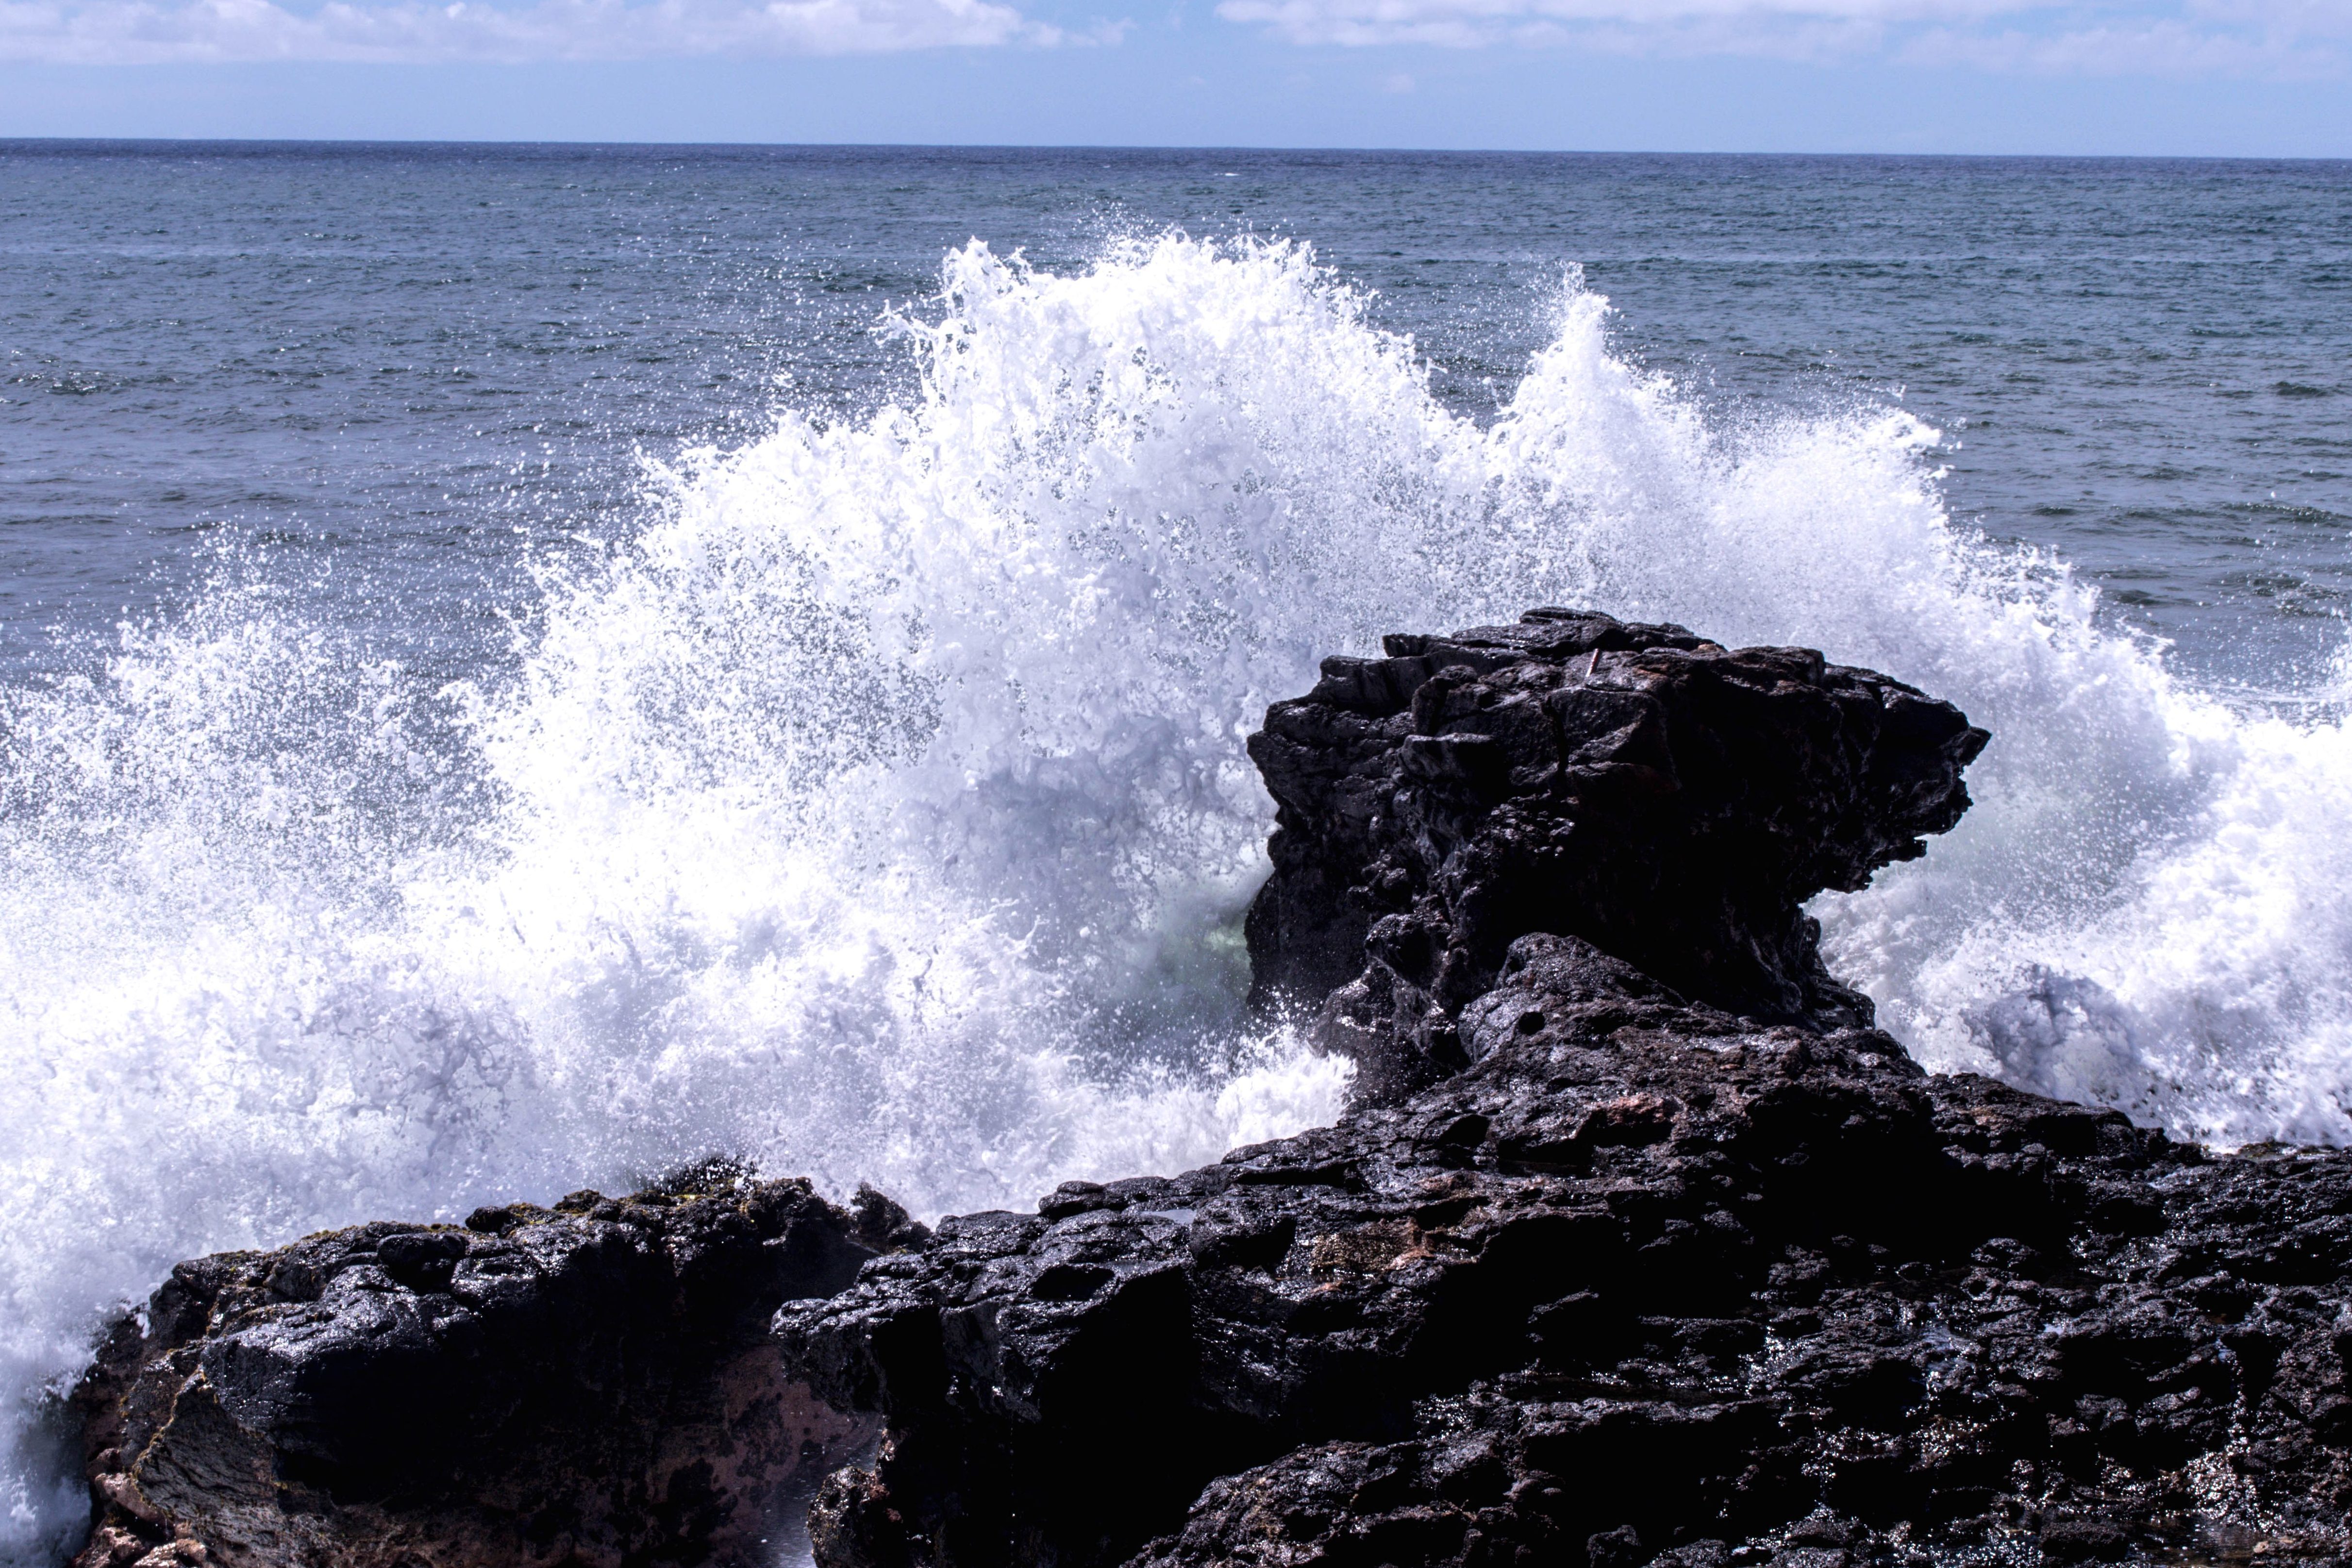 Free picture: rock, splash, ocean, water, sea, seashore, wave, beach ...